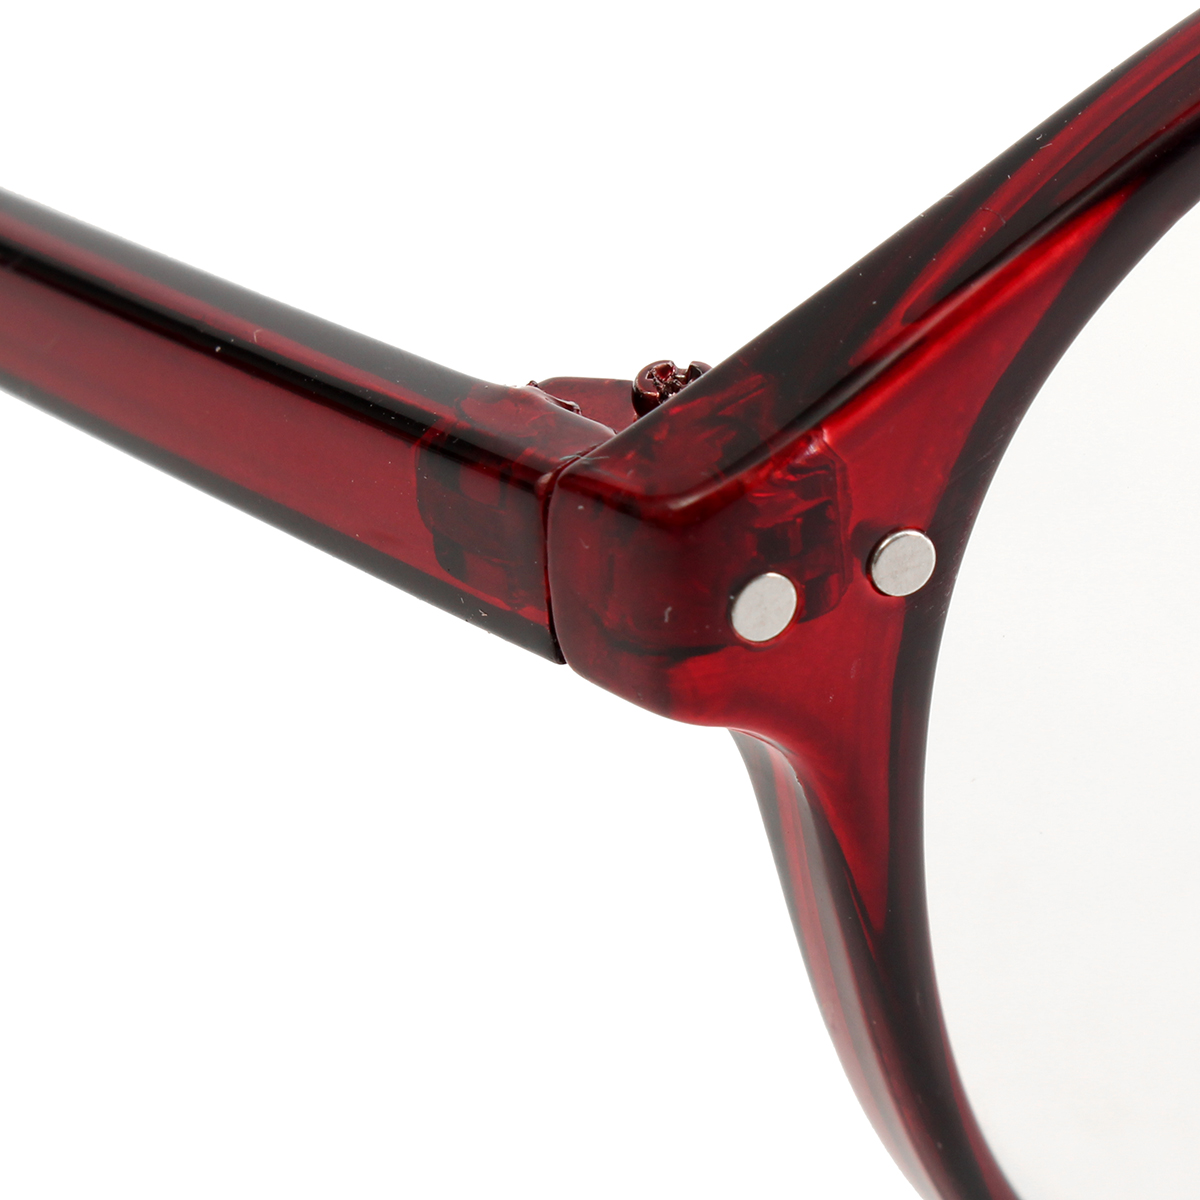 Vintage-Round-Eyeglass-Frame-Glasses-Retro-Spectacles-Clear-Lens-Eyewear-1277028